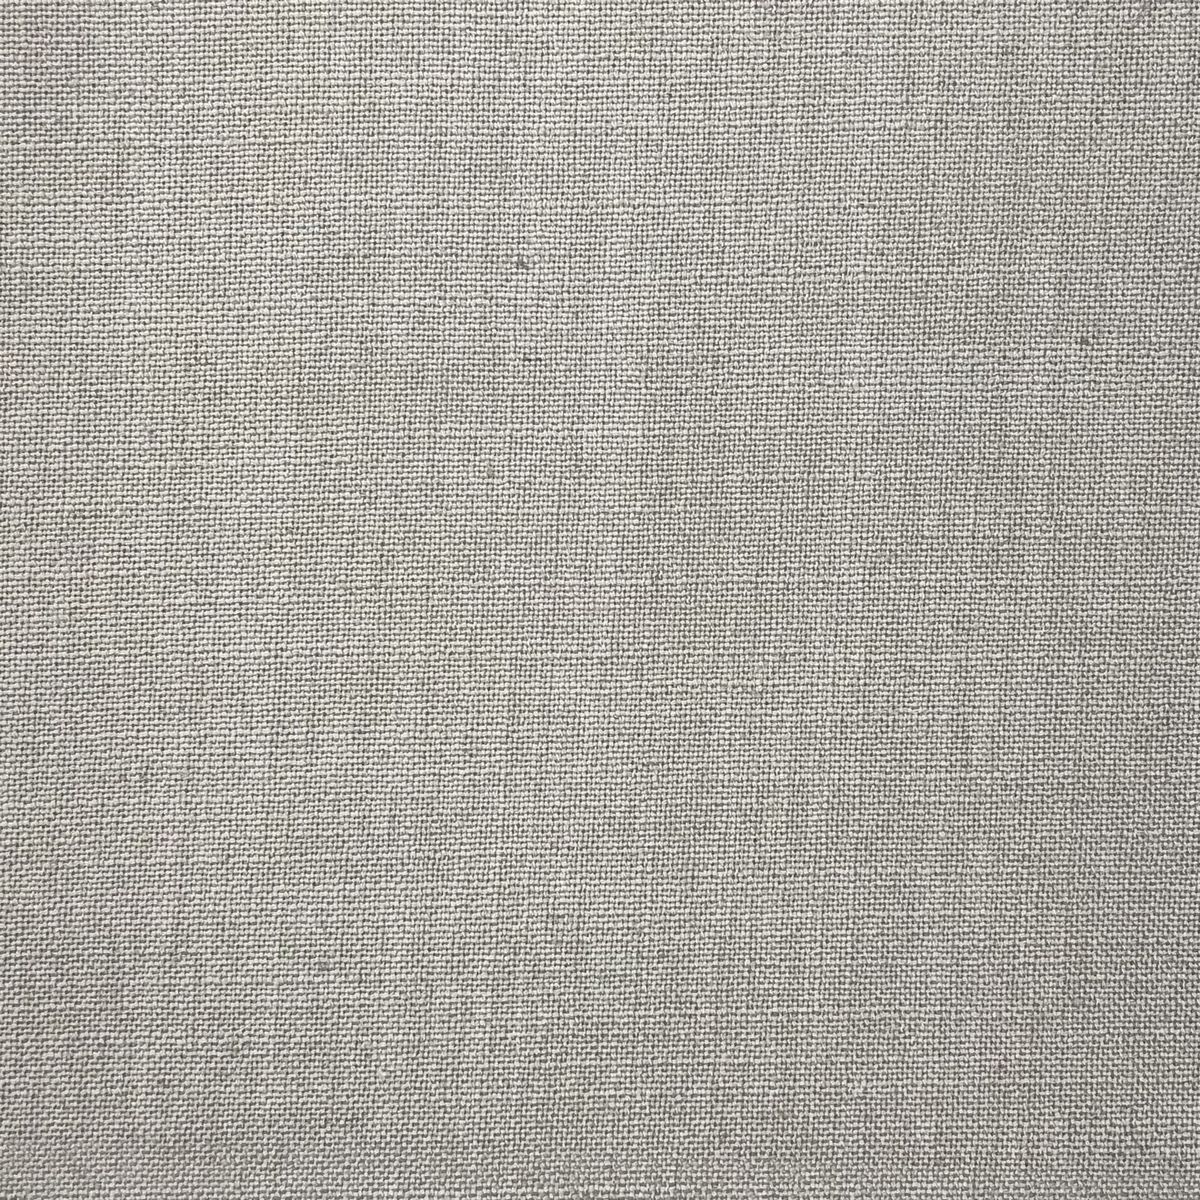 Linum Peyote Fabric by Chatham Glyn